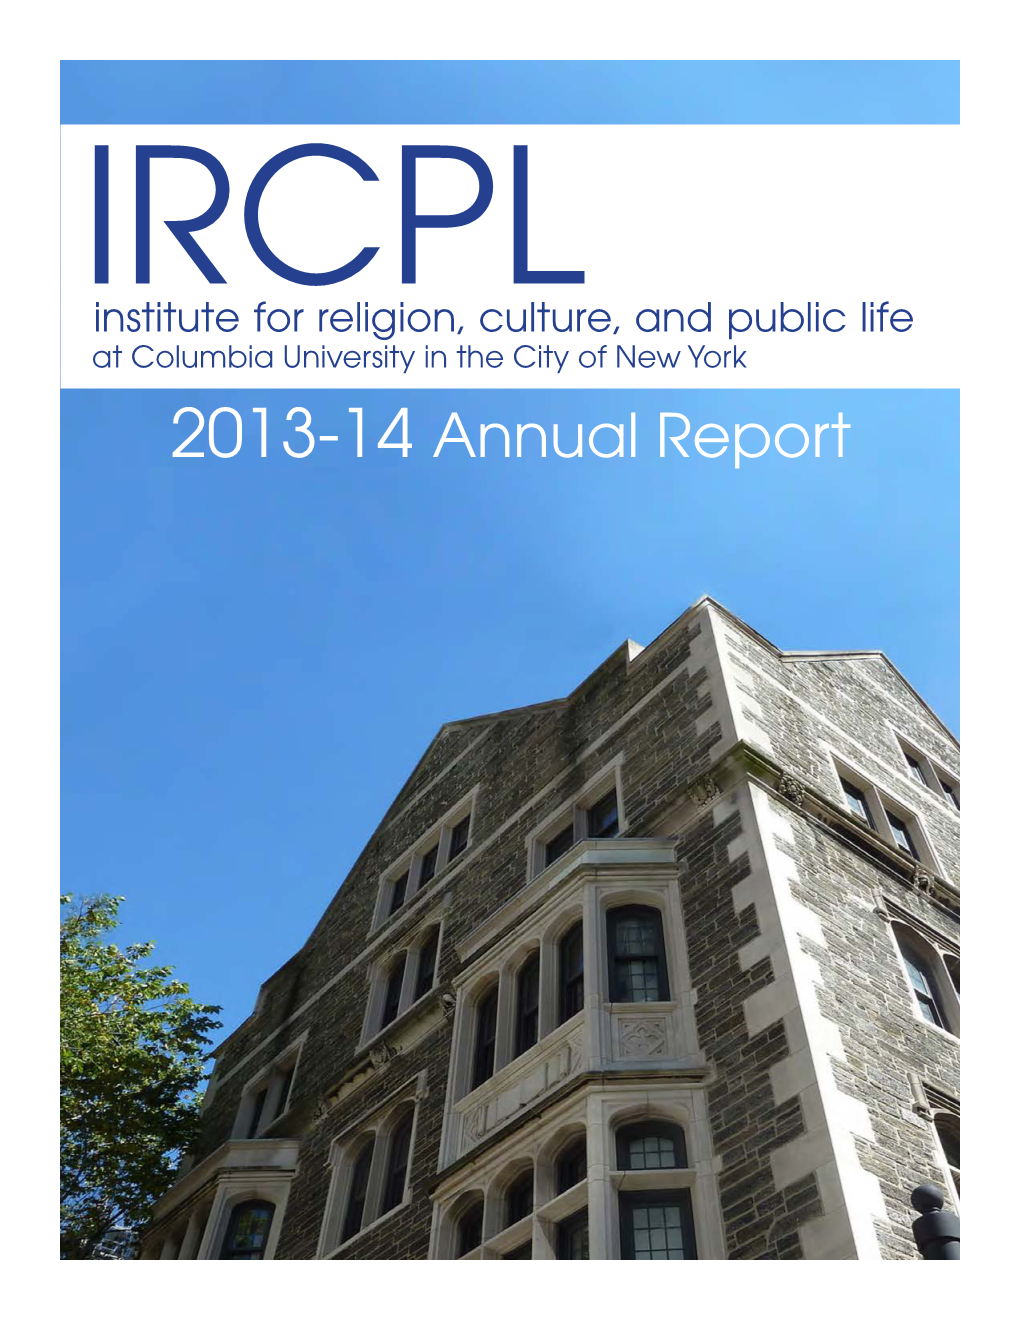 2013-14 Annual Report Mission Statement